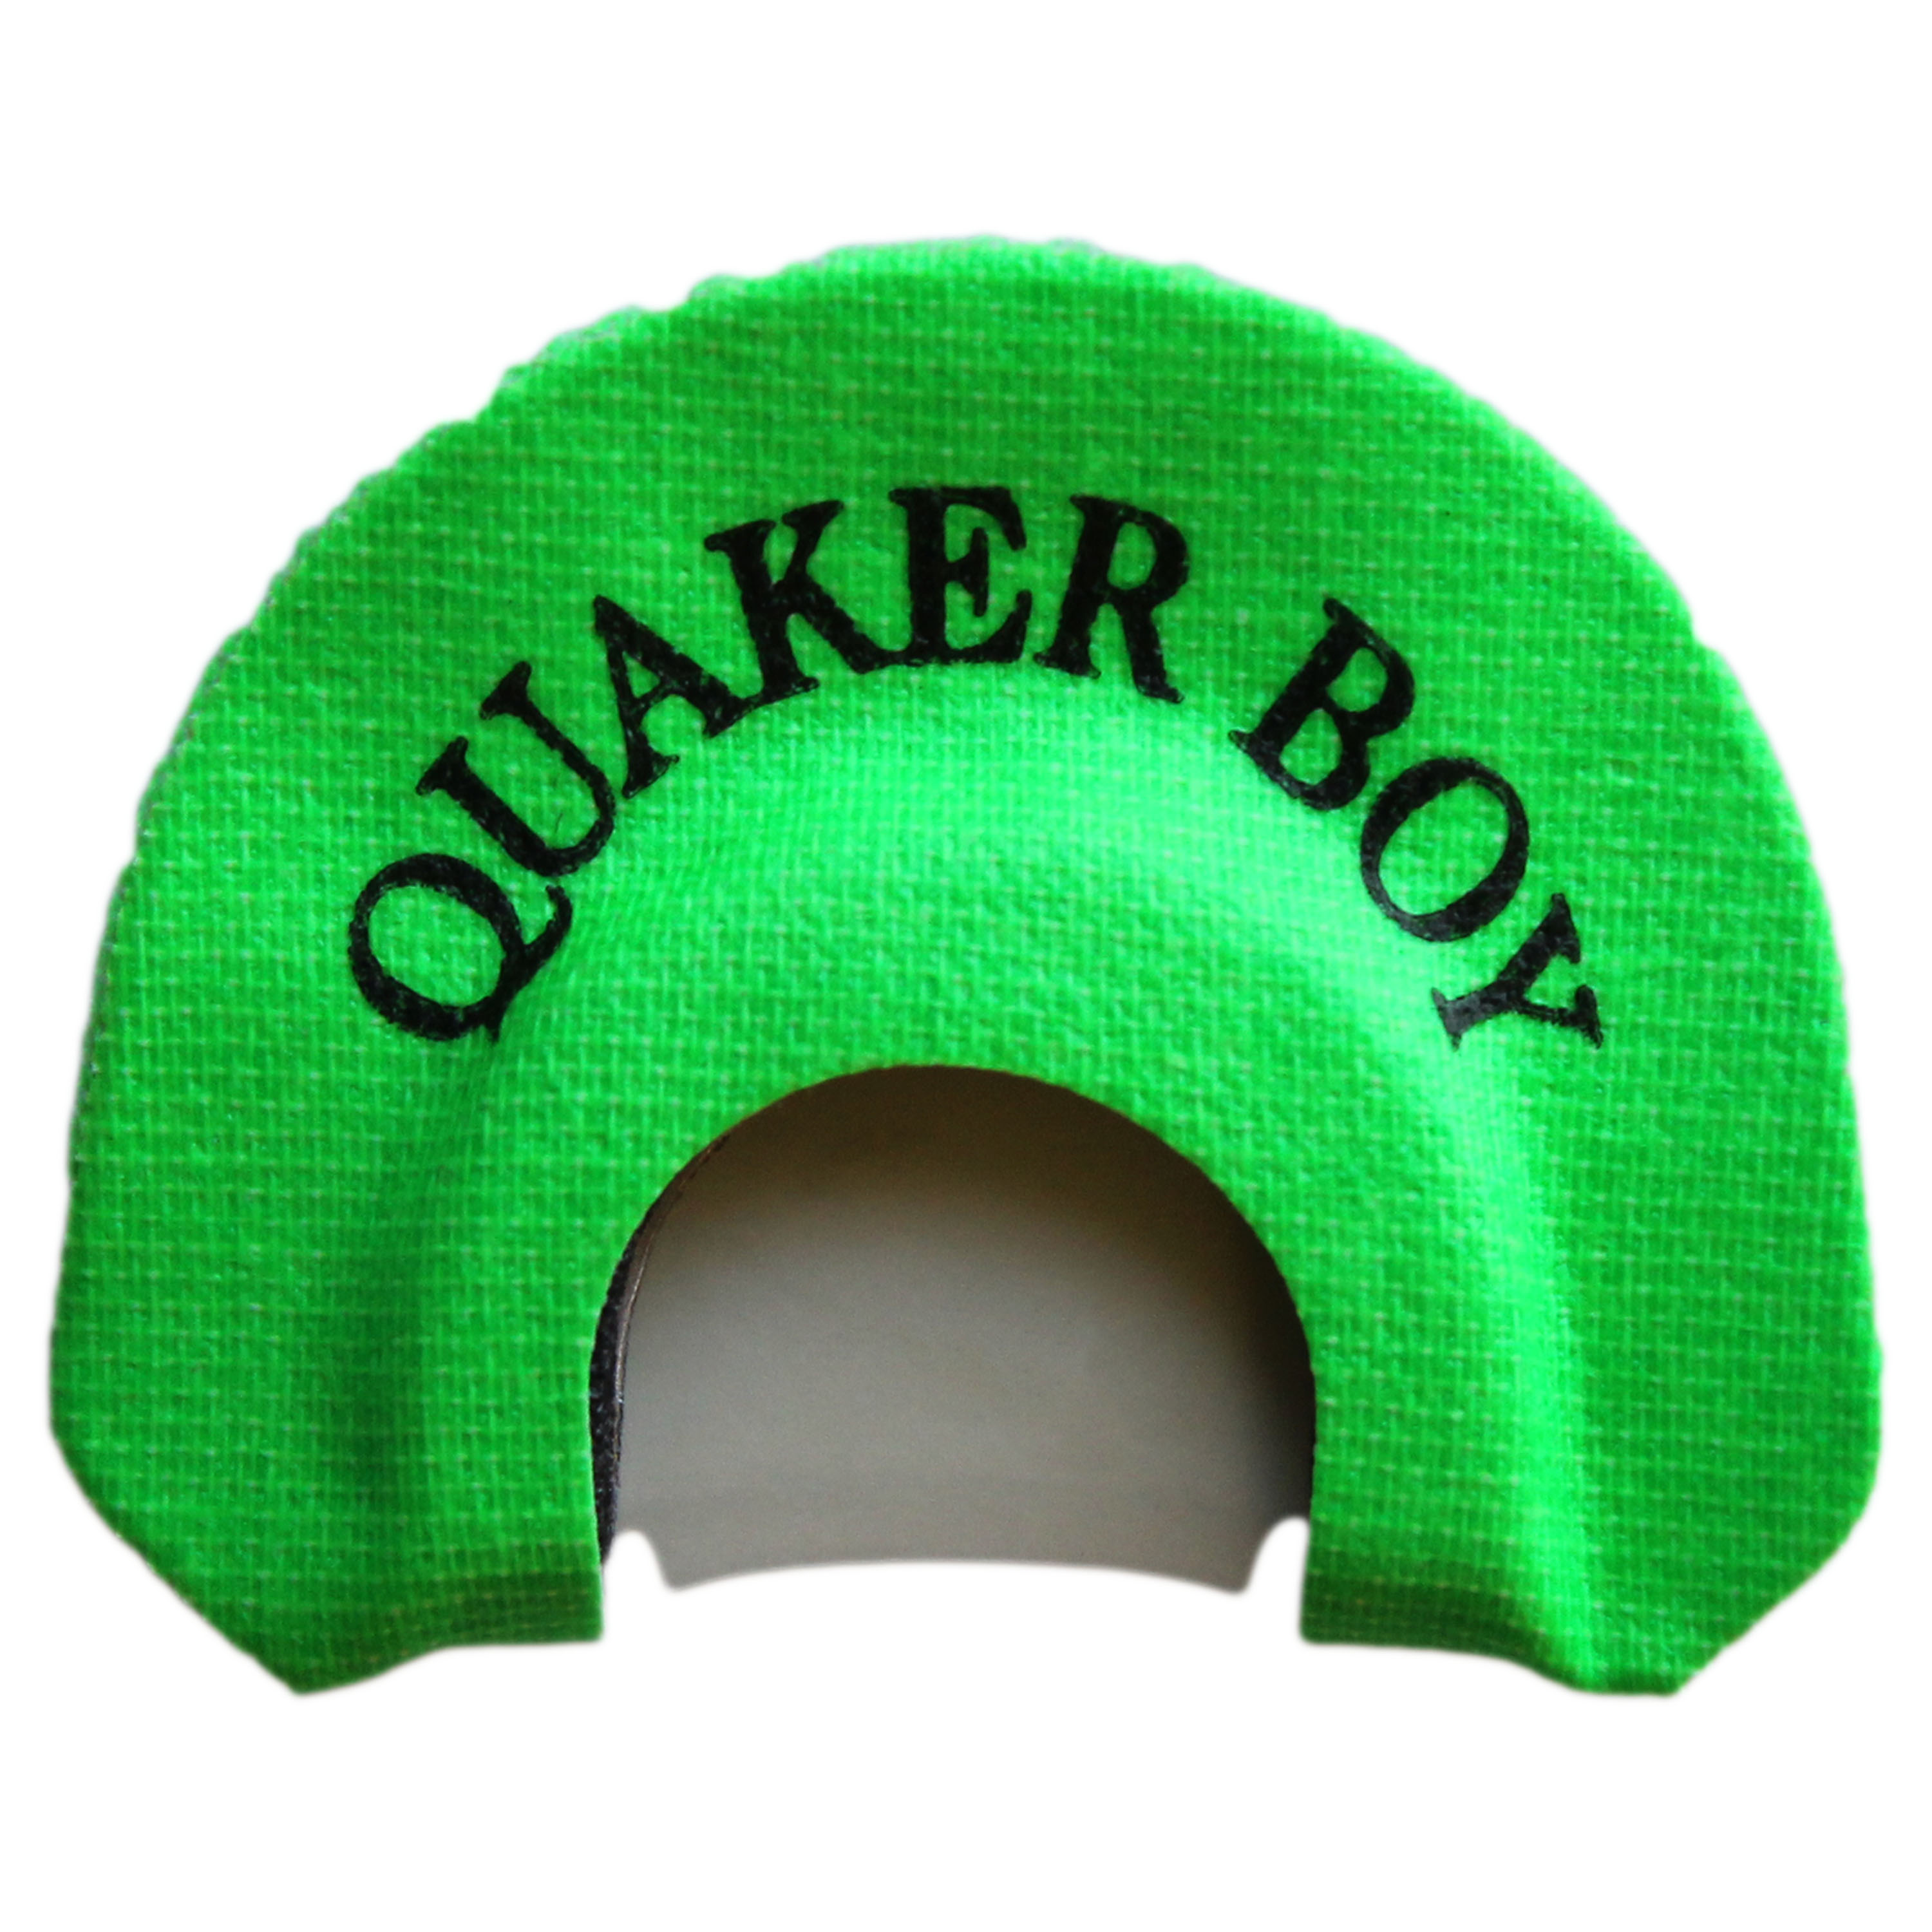 Quaker Boy 11136 Elevation Series SealRite Boomerang Mouth Turkey Call 